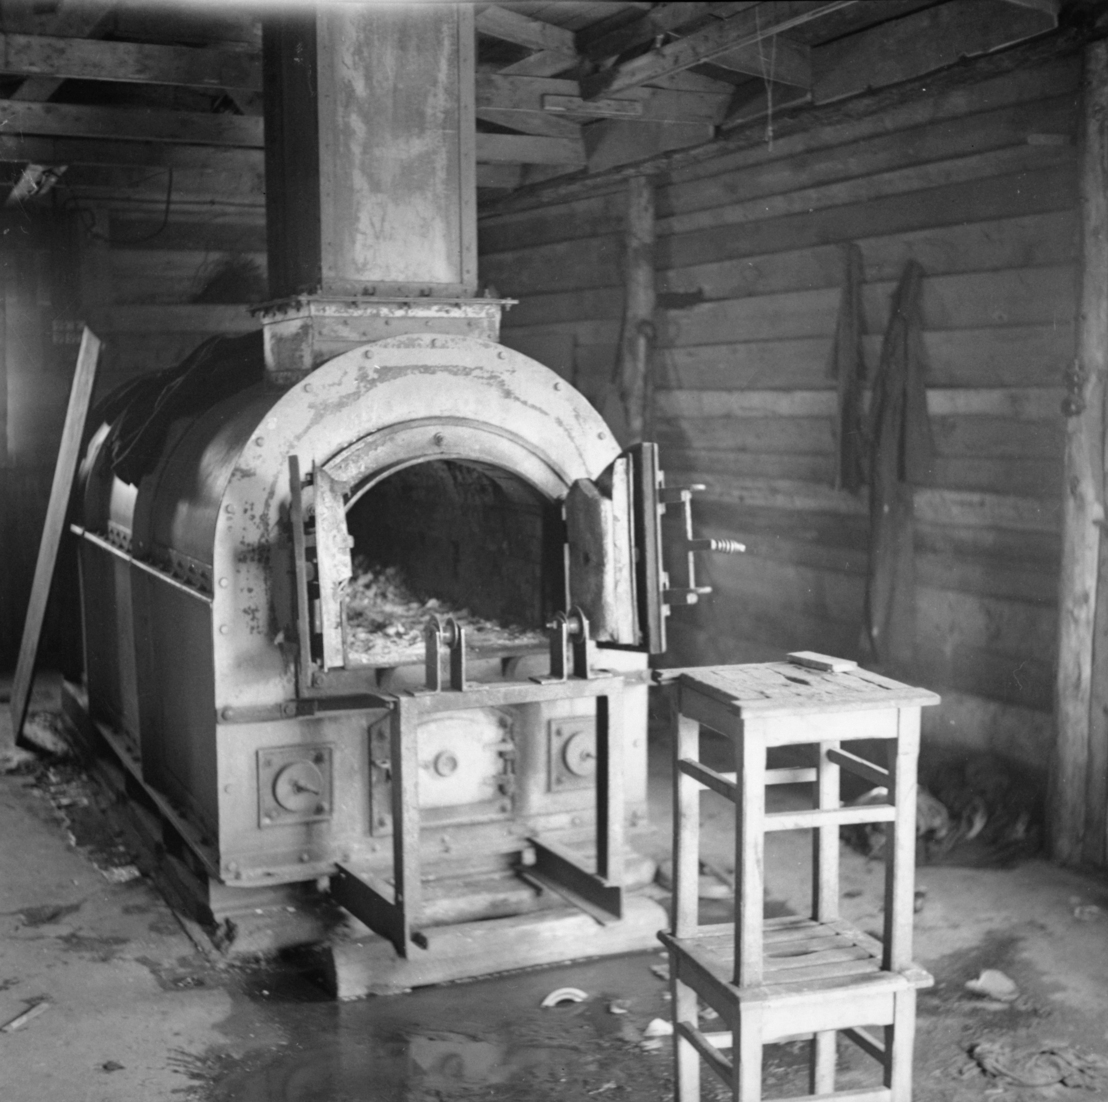 Crematorium oven, 17 April 1945. Photo by Sgt. Oakes. Imperial War Museum, London, Photograph Archive, BU 4004.